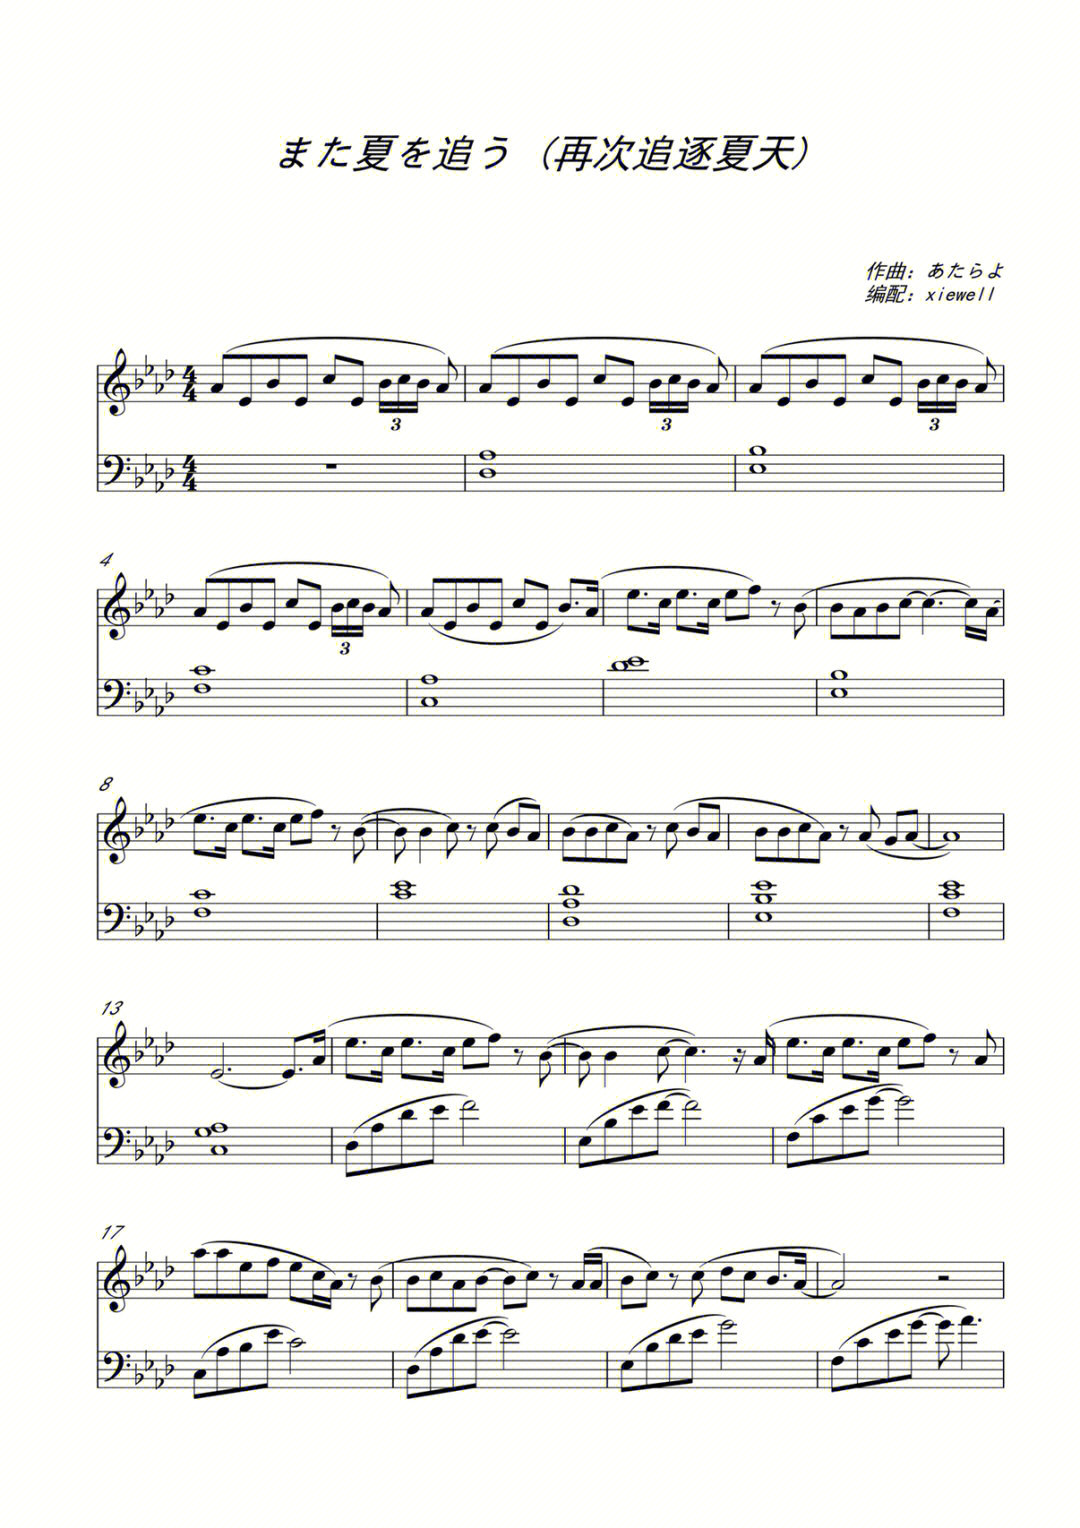 blackbird日语歌钢琴谱图片